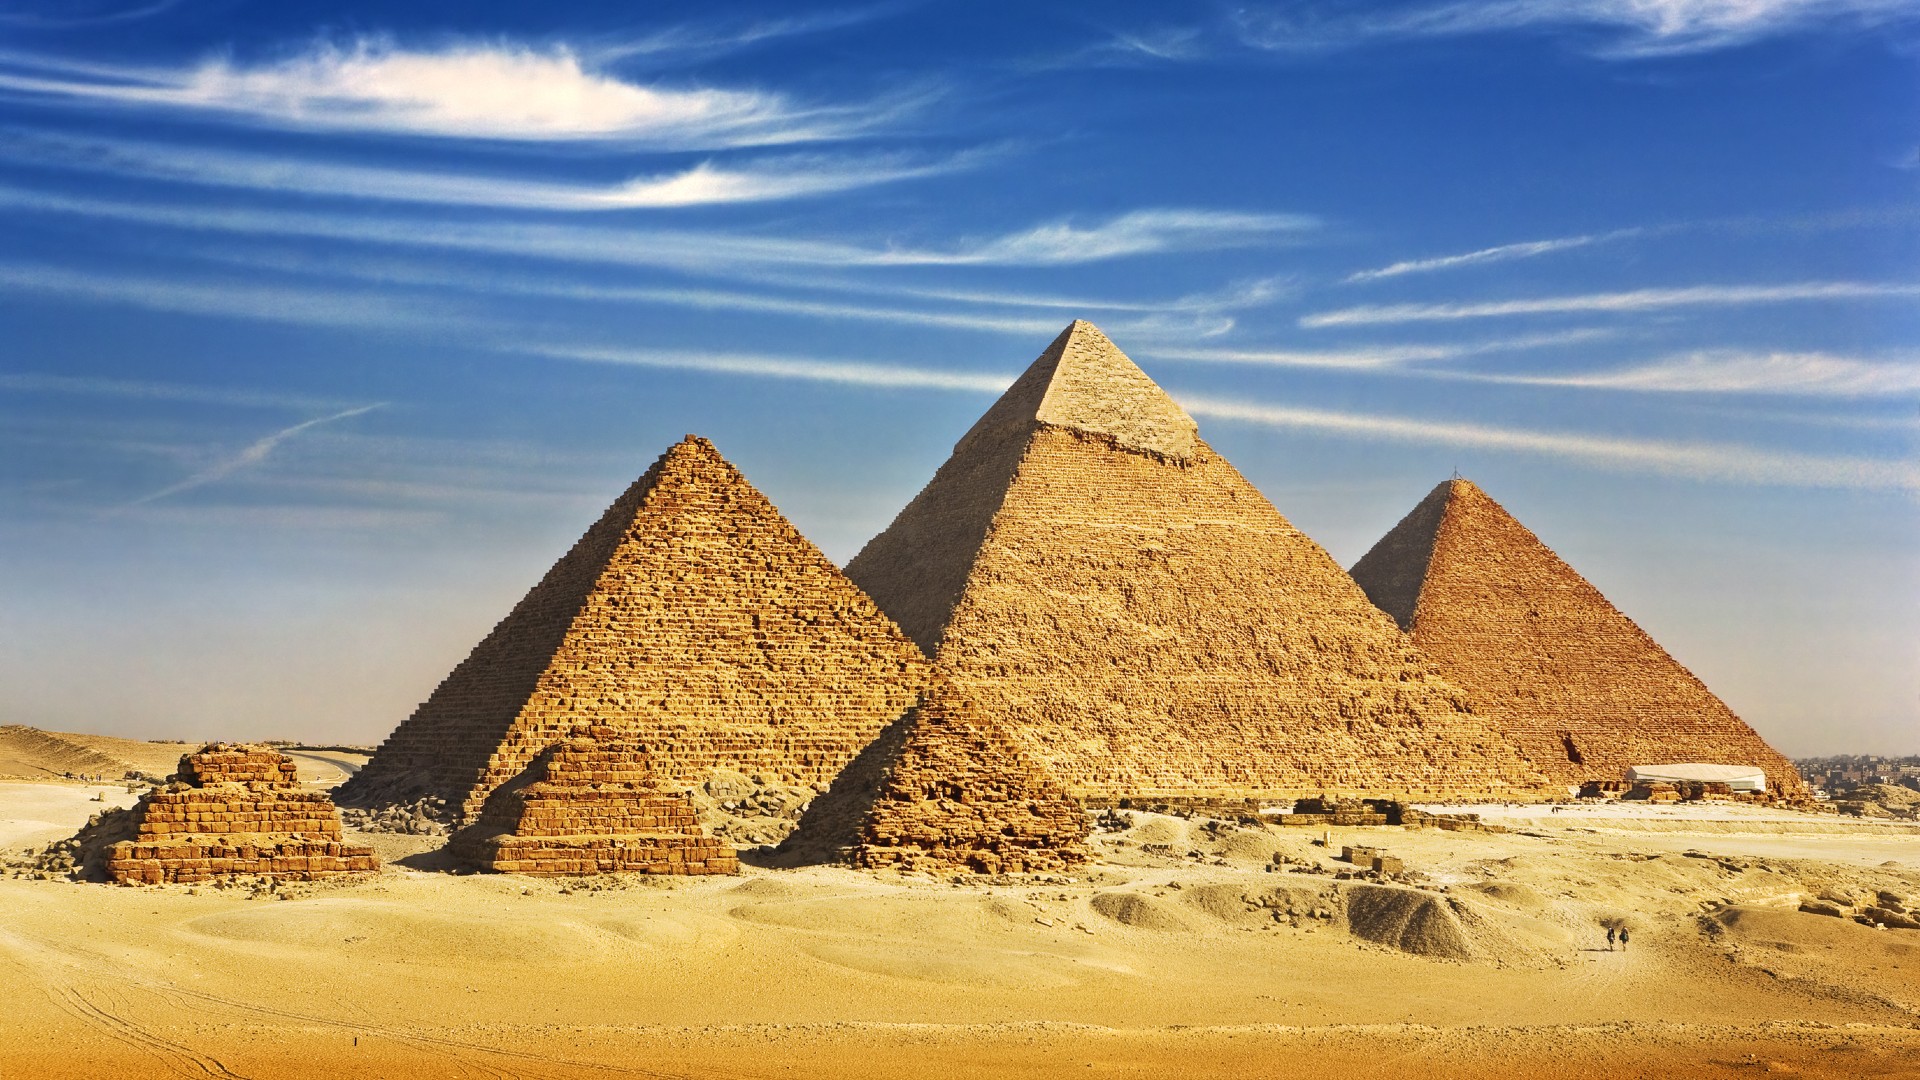 Cairo, Egypt – Pyramids of Giza and Sphinx